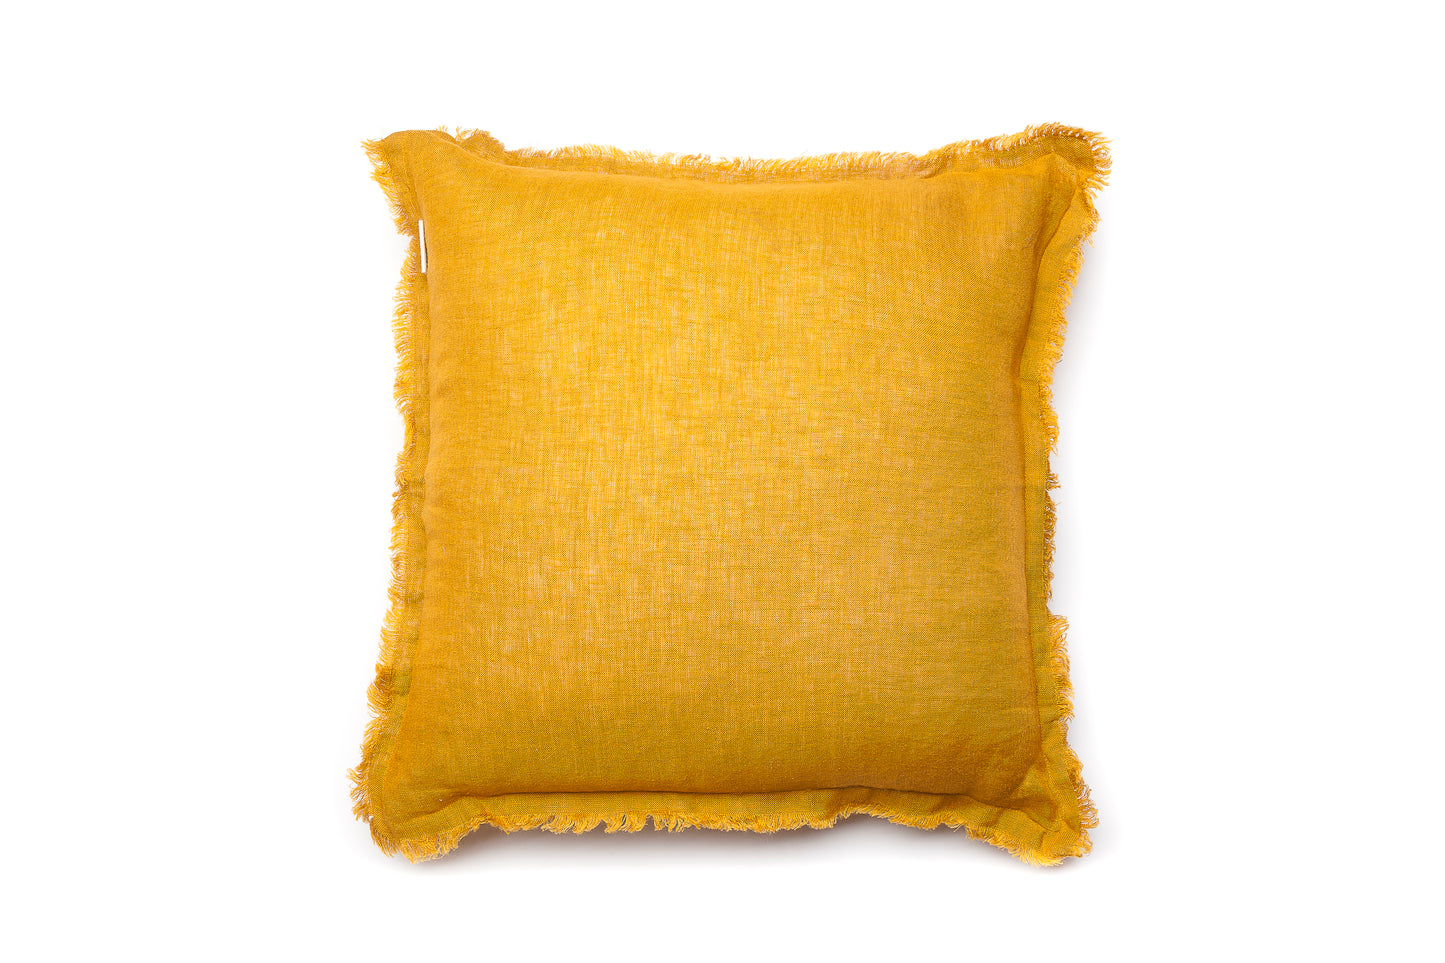 Saffron Linen Cushion